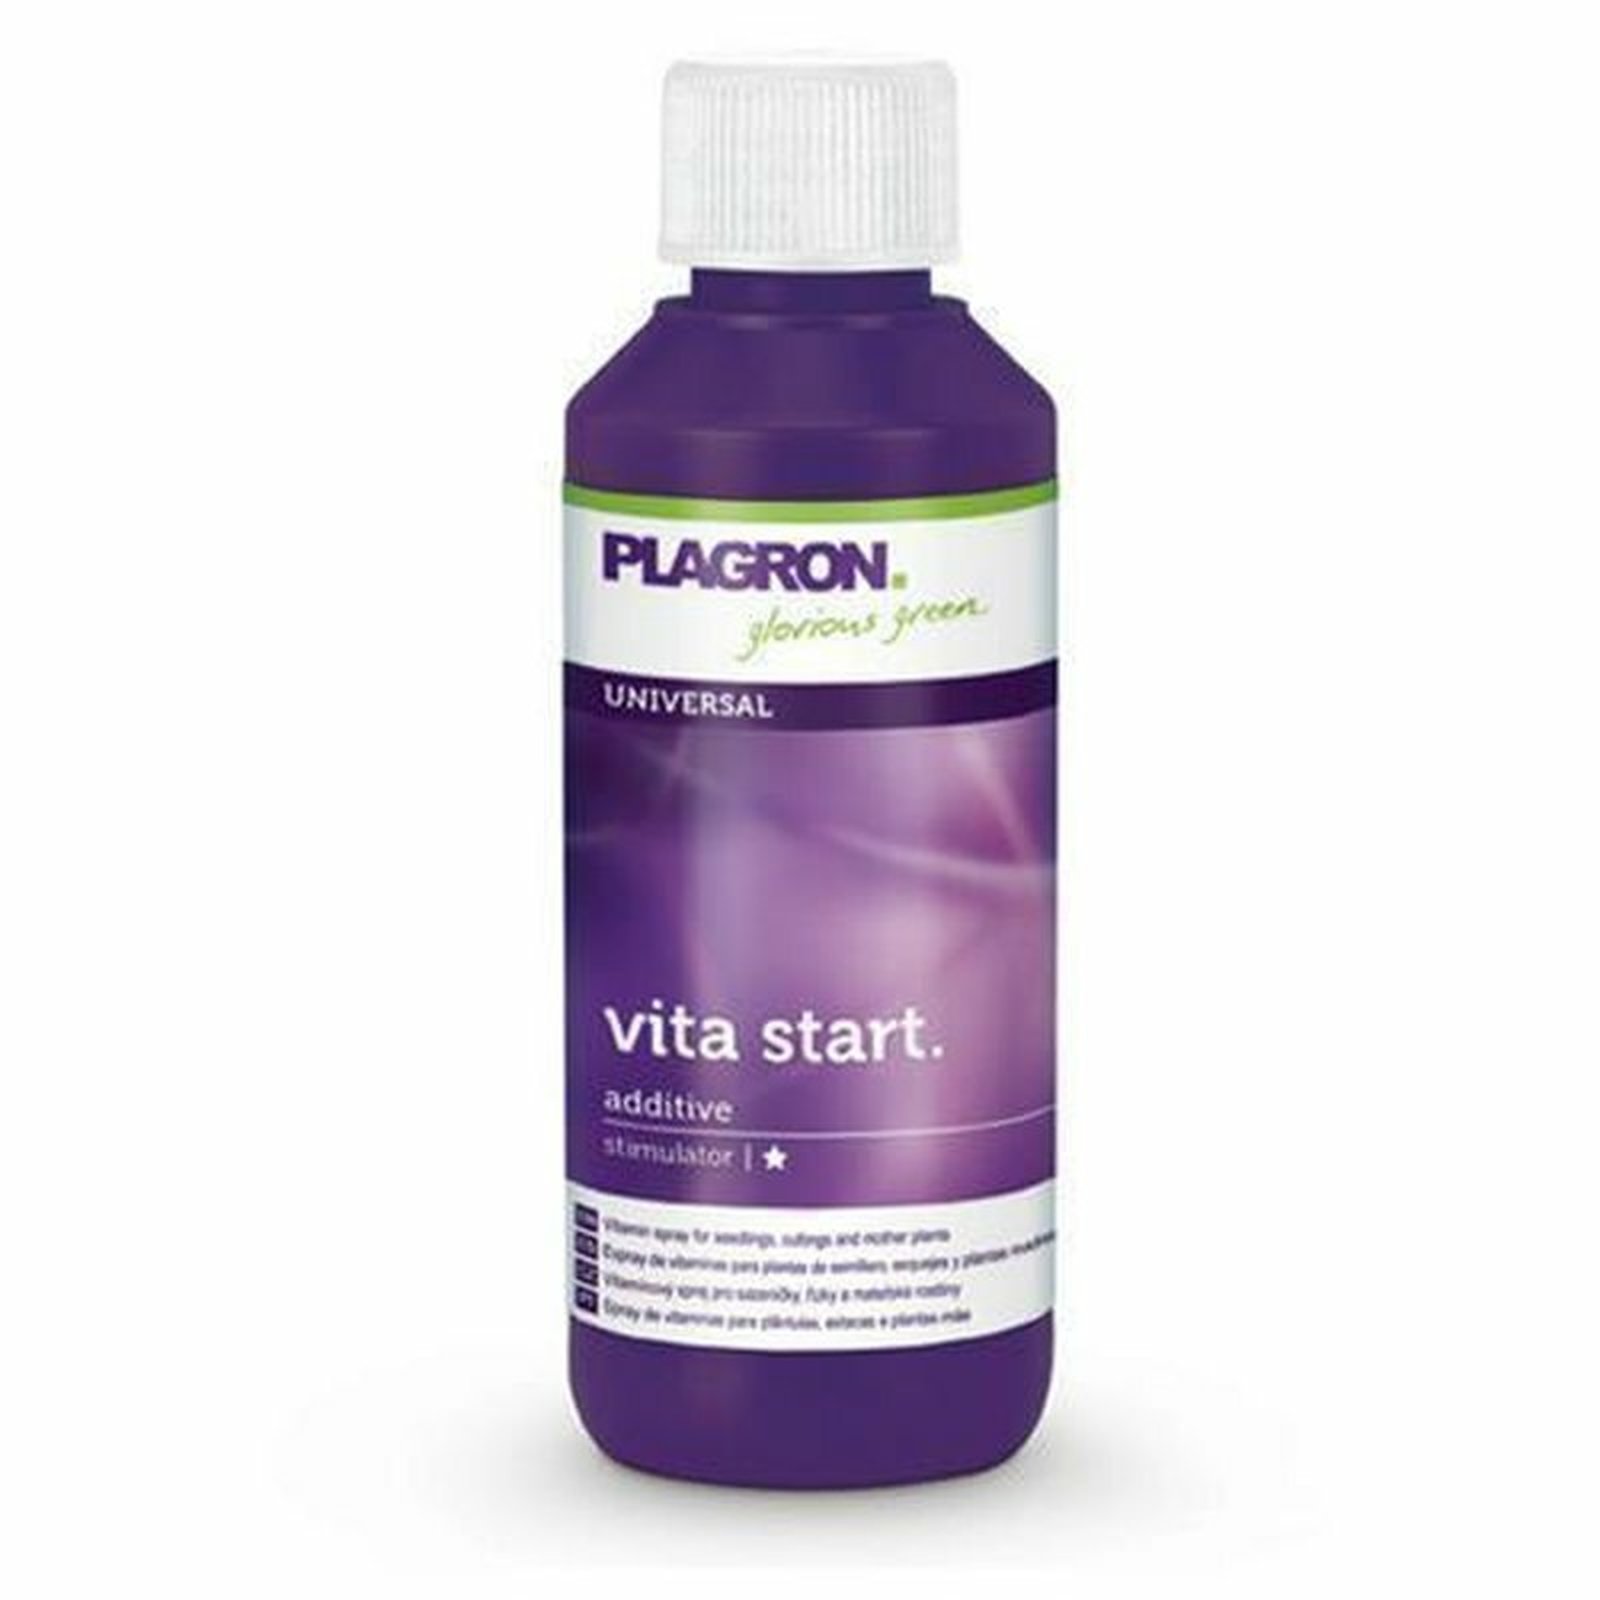 Plagron Vita Start - 100ml